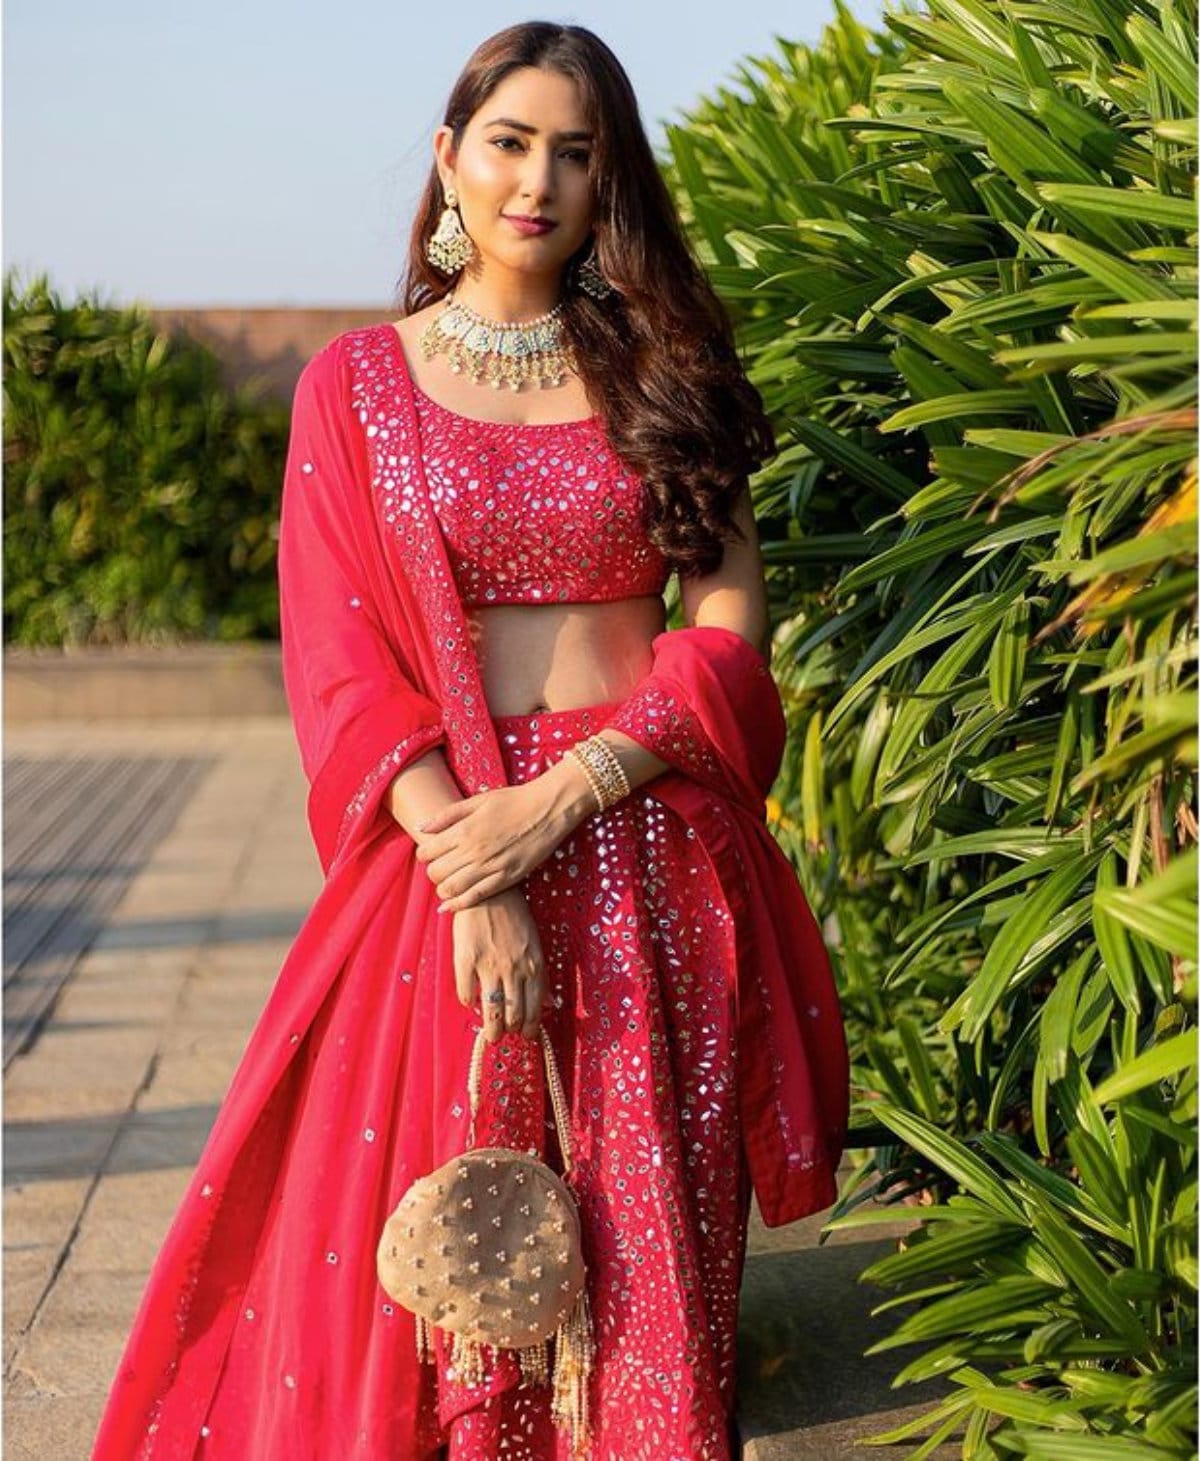 Lehenga Skirt With Beautiful Embroidered Blouse And Dupatta | Shilpi Gupta